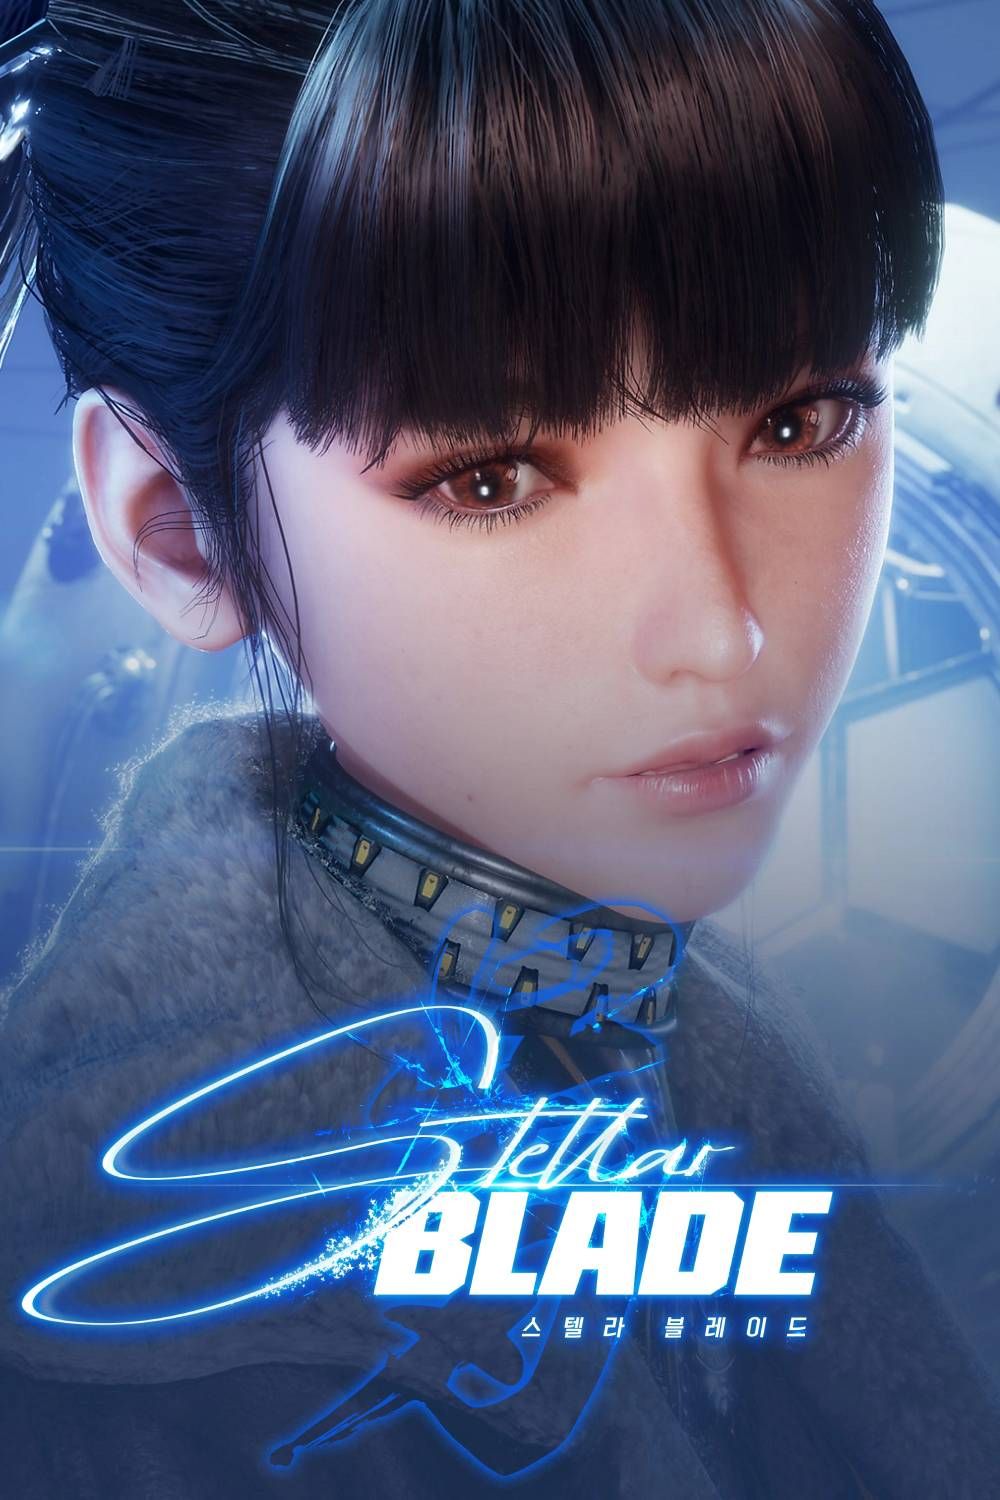 Stellar Blade Tag Page Cover Art